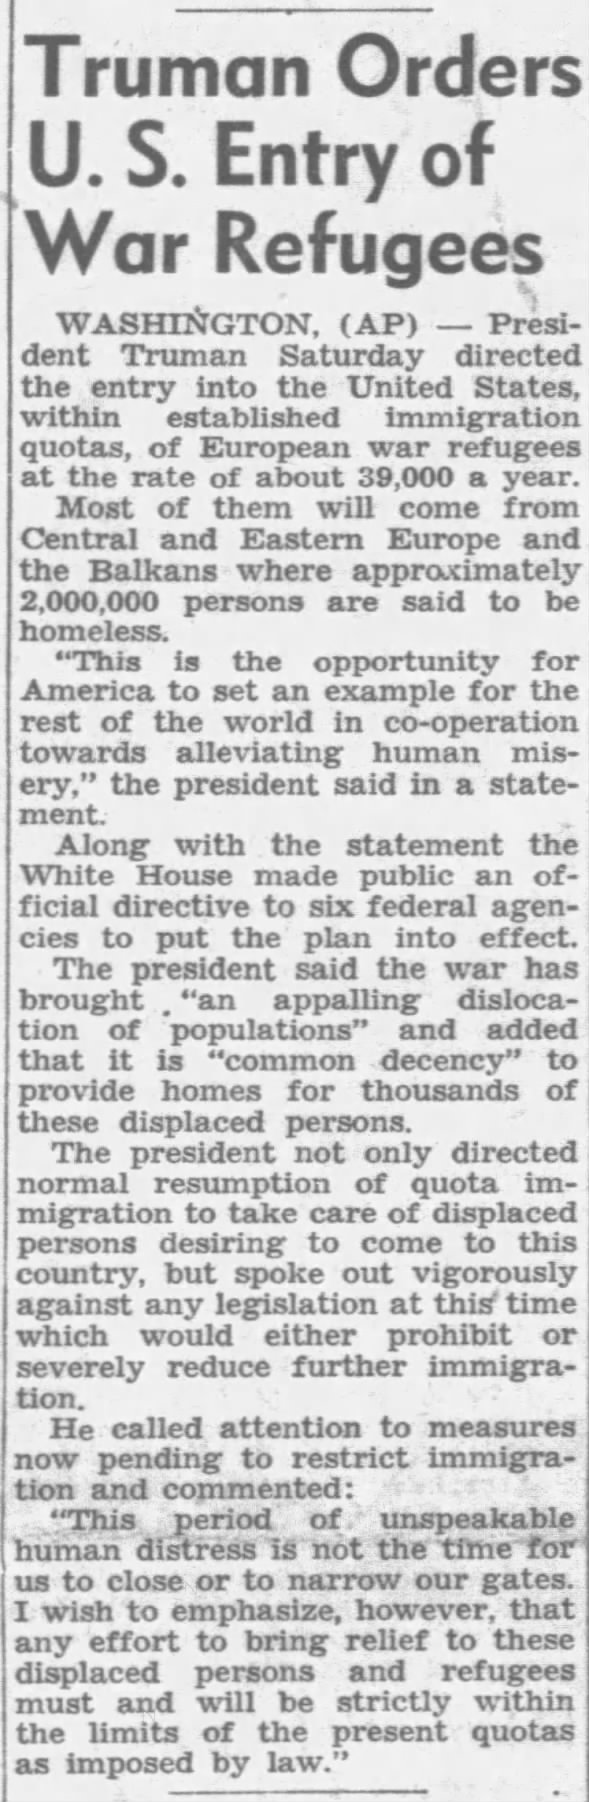 Truman Orders U.S. Entry of War Refugees